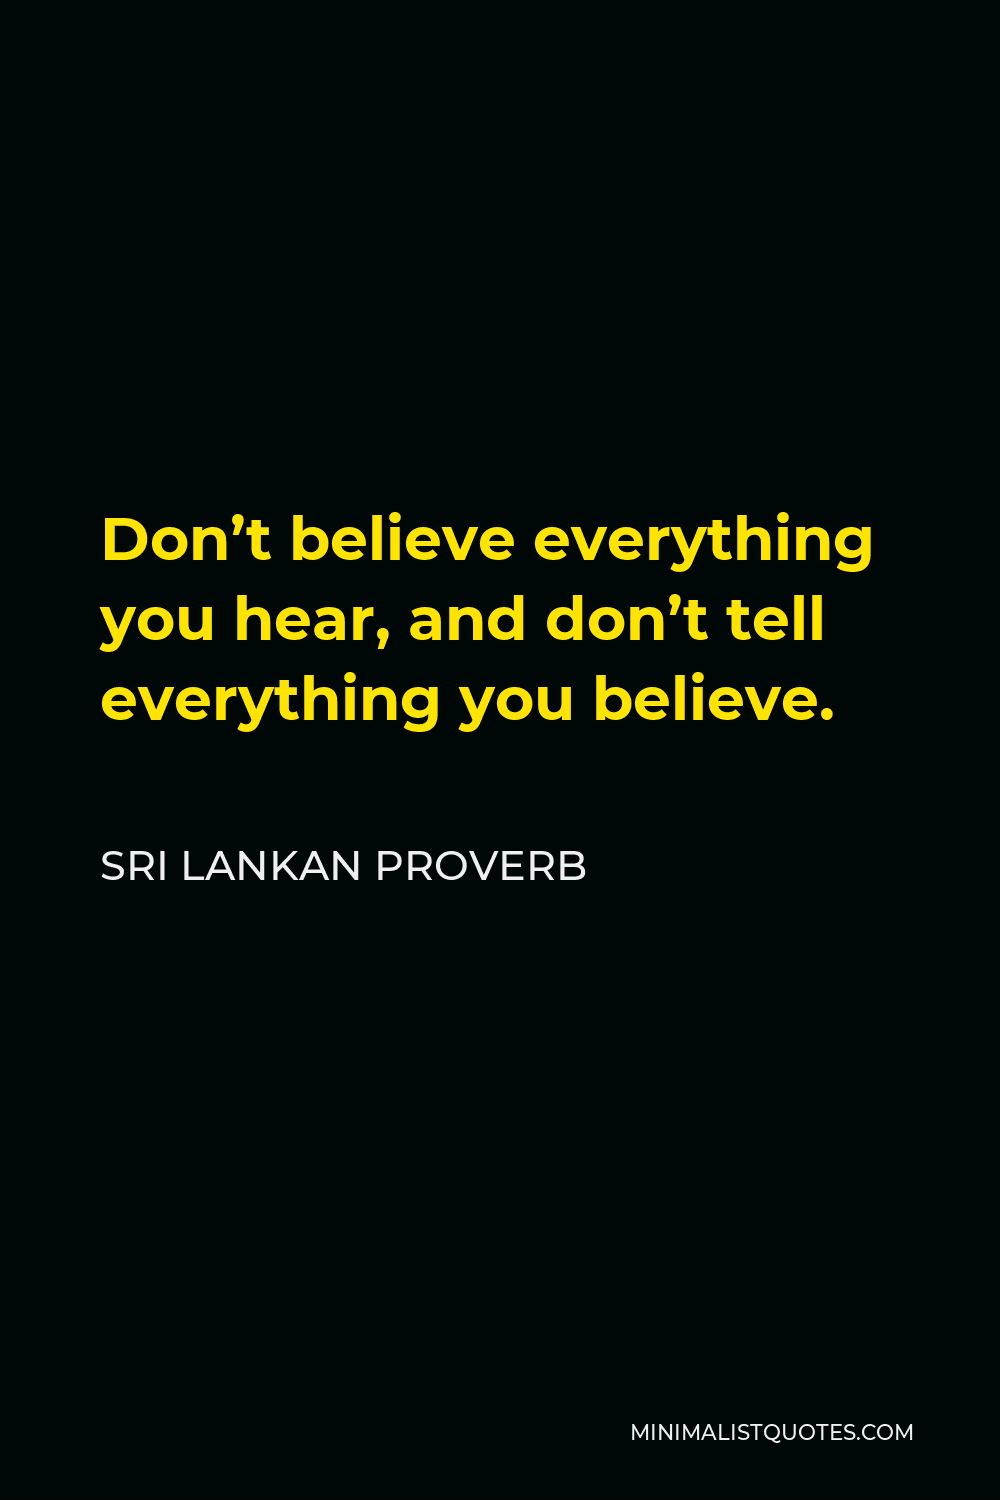 Sri Lankan Proverb Quote - Don’t believe everything you hear, and don’t tell everything you believe